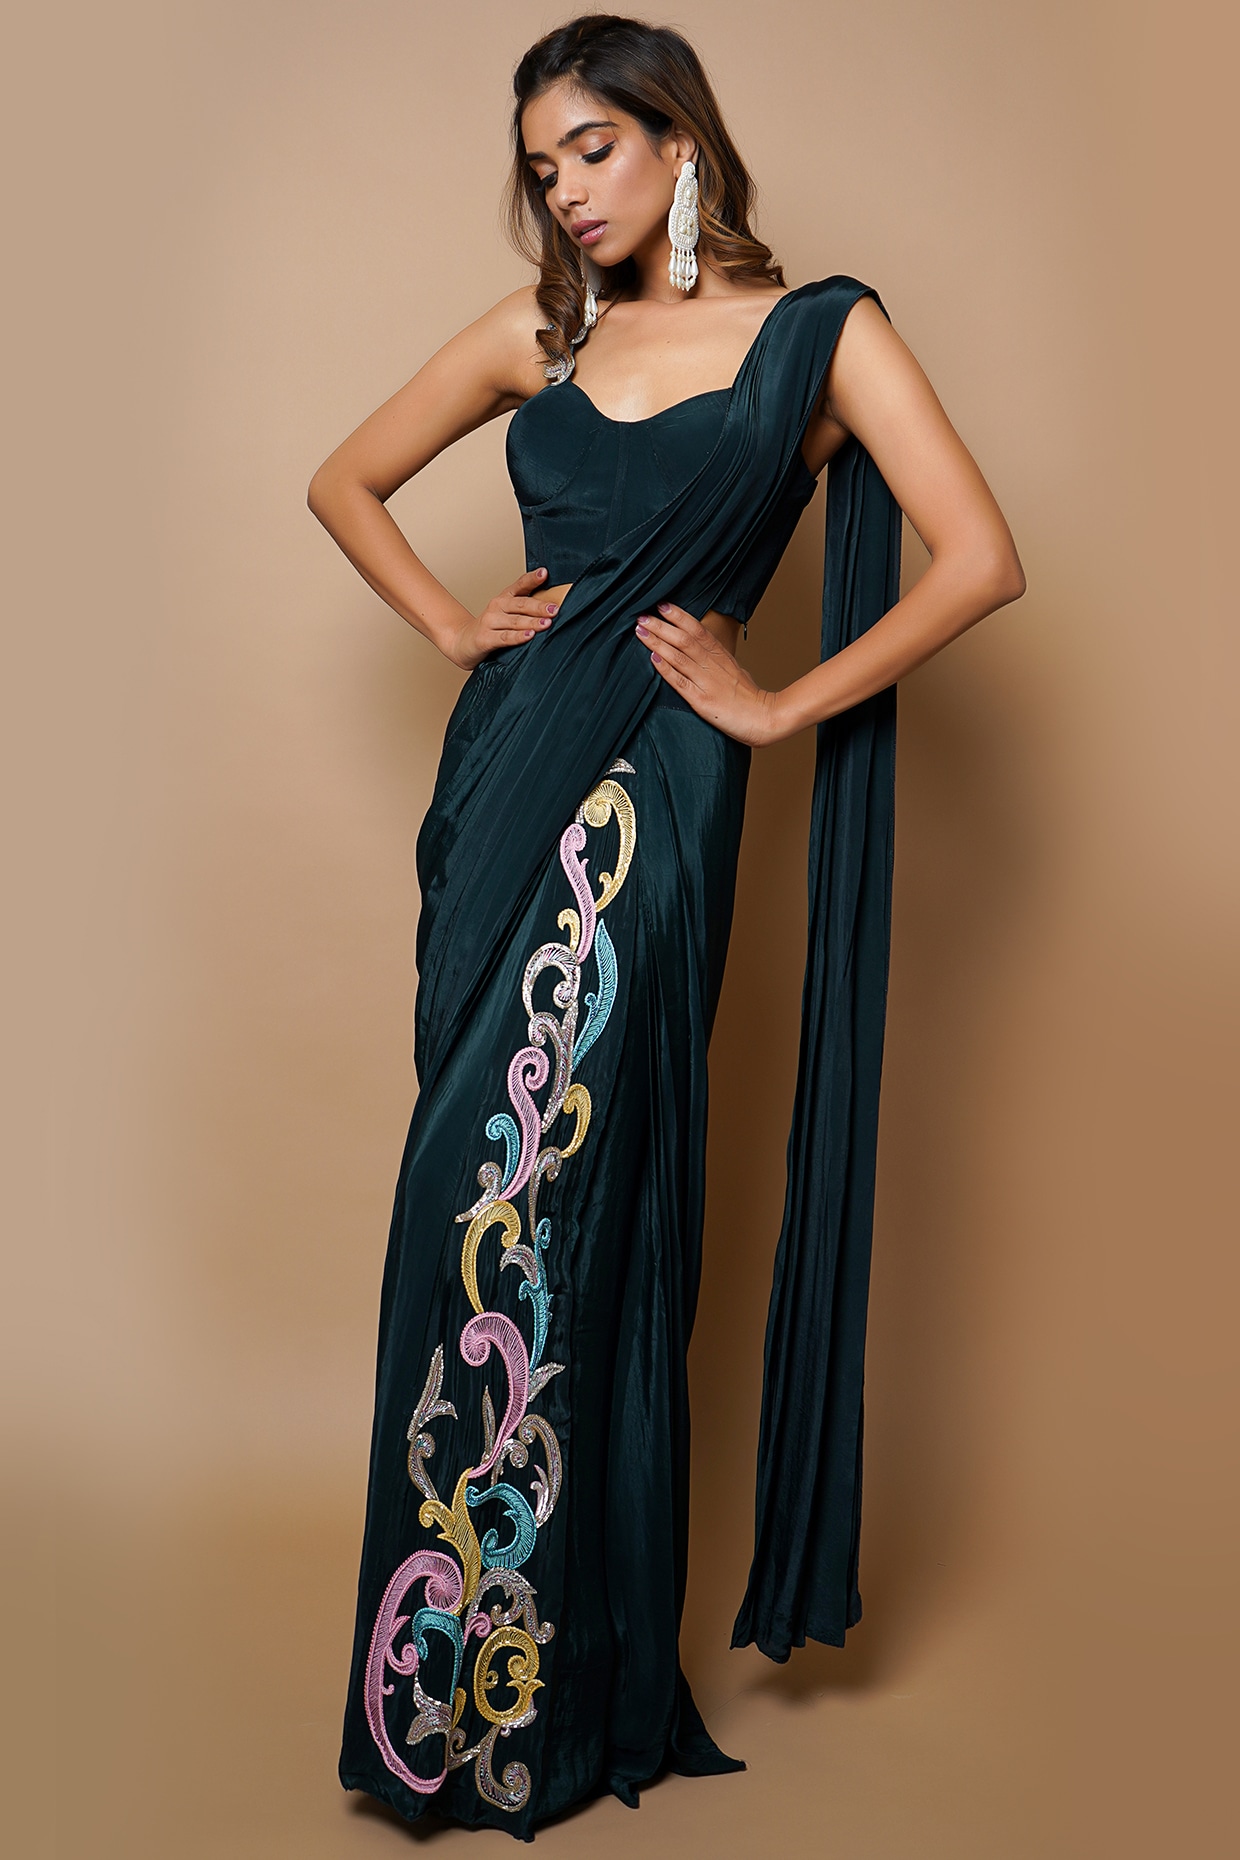 SAMAYA-The Fashion Studio | Indore